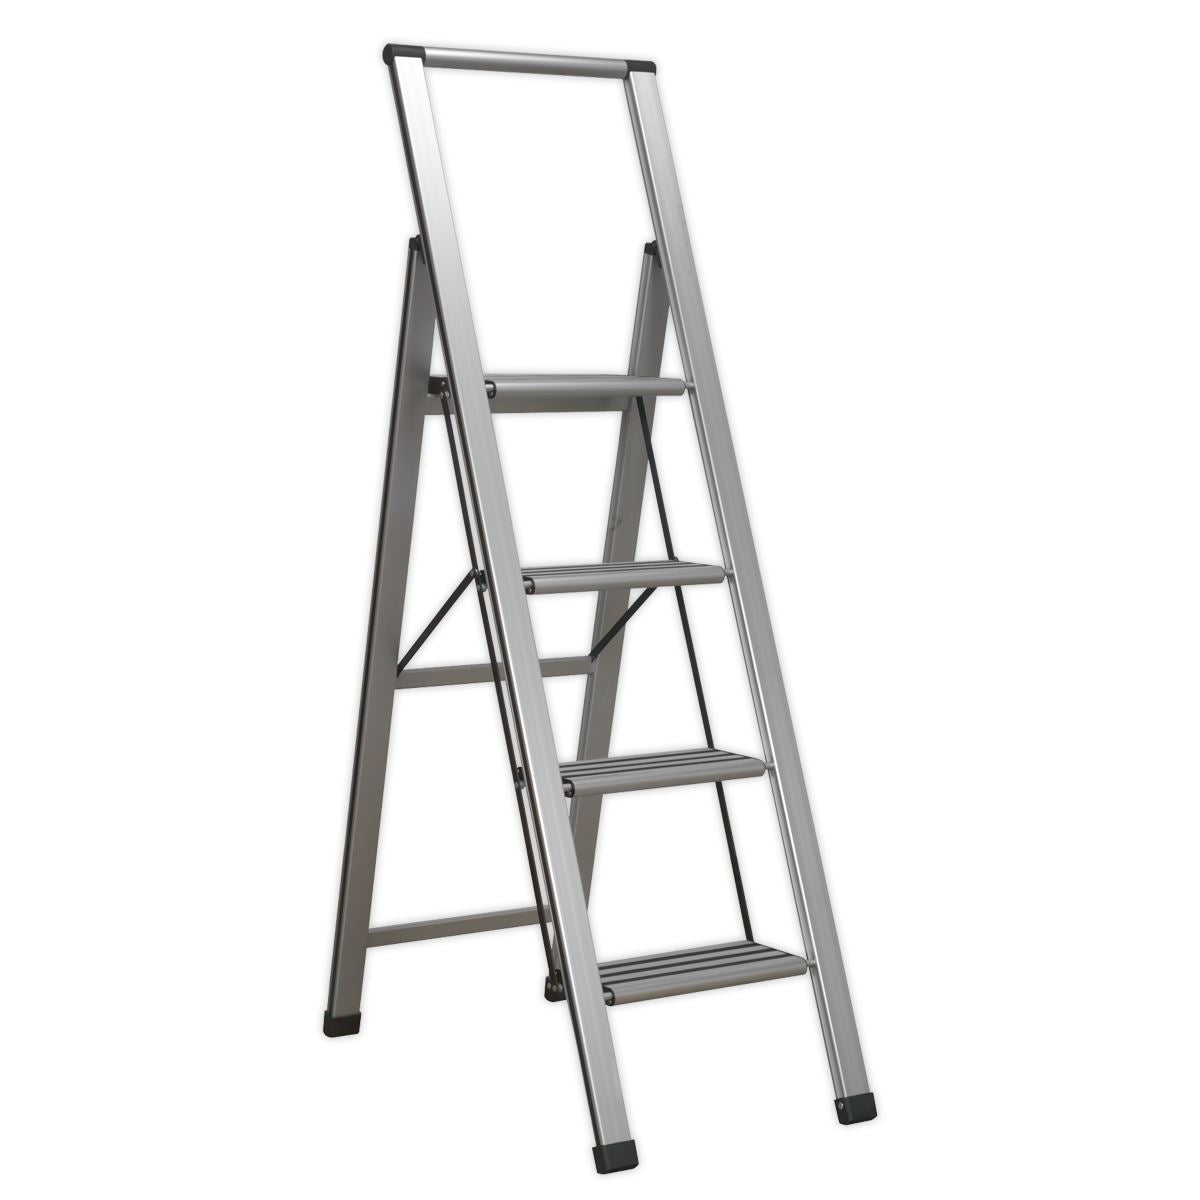 Sealey Aluminium Professional Folding Step Ladder 4-Step 150kg Capacity